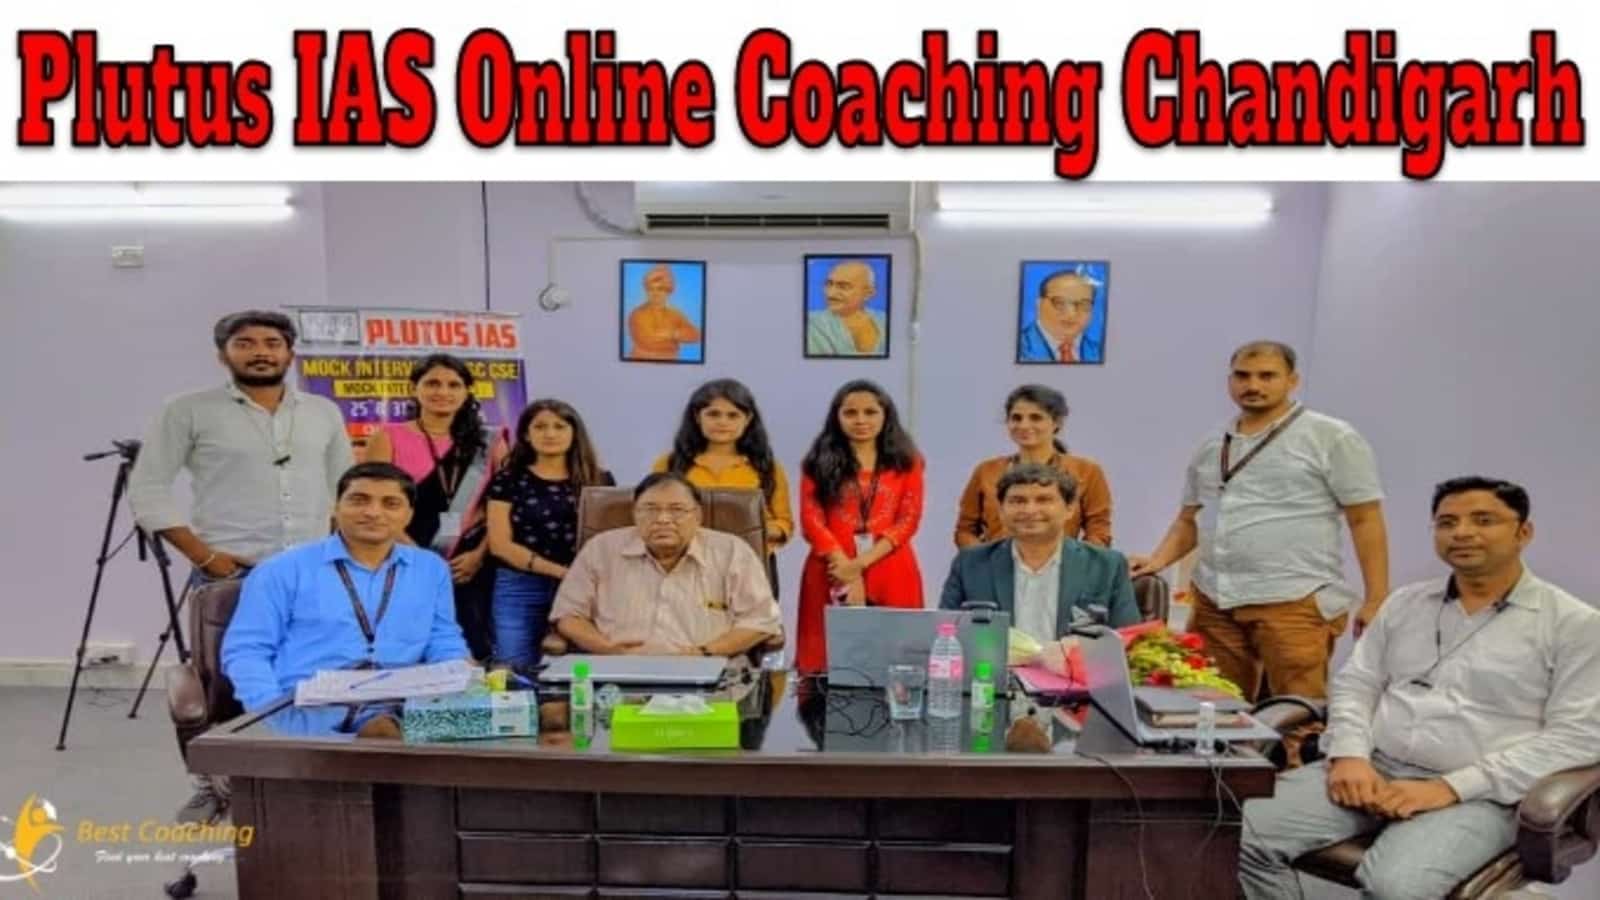 Plutus IAS Online Coaching Chandigarh